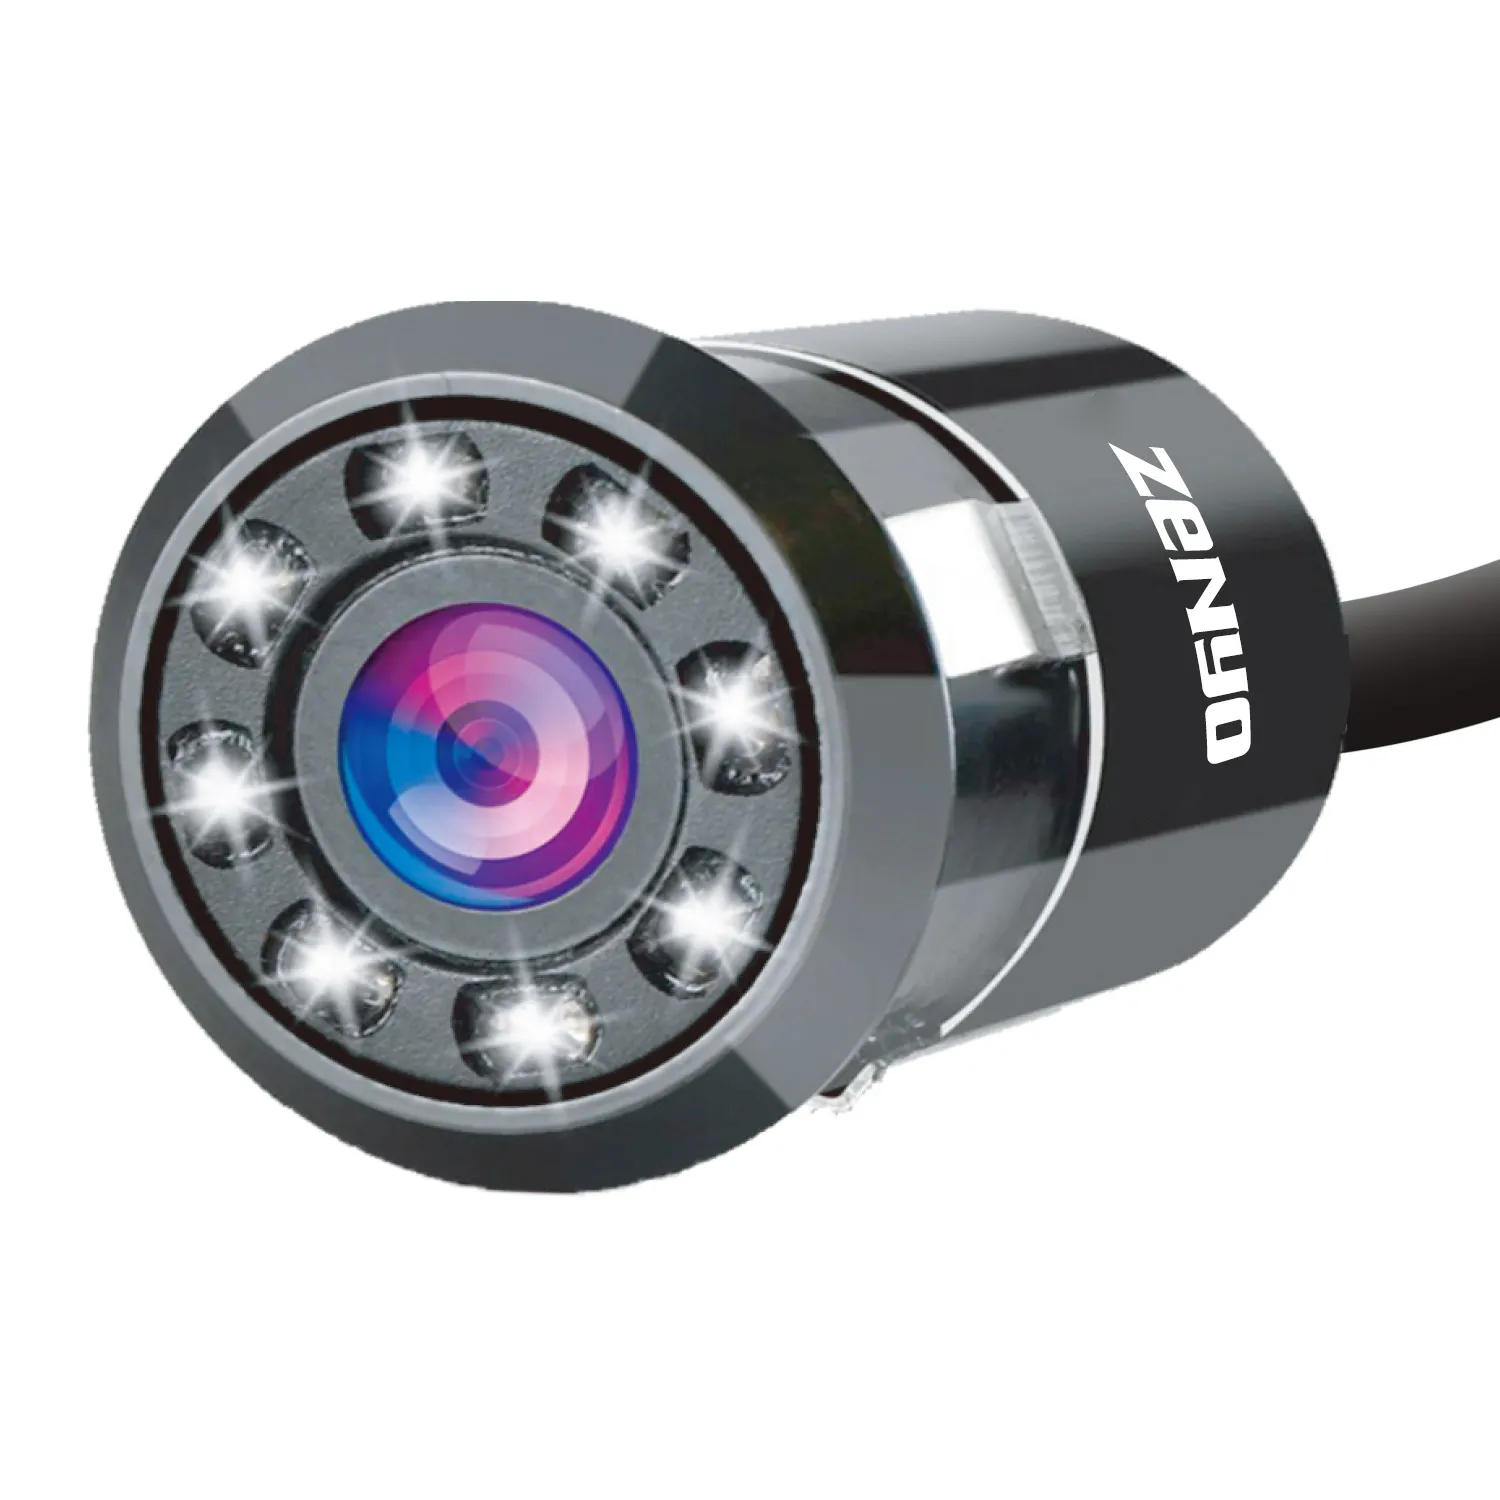 18.5mm 150 Degree Wide Angle Car Reverse Camera Hd Night Vision Rear View Camera Backup Parking Camcorder Reversing Monitor